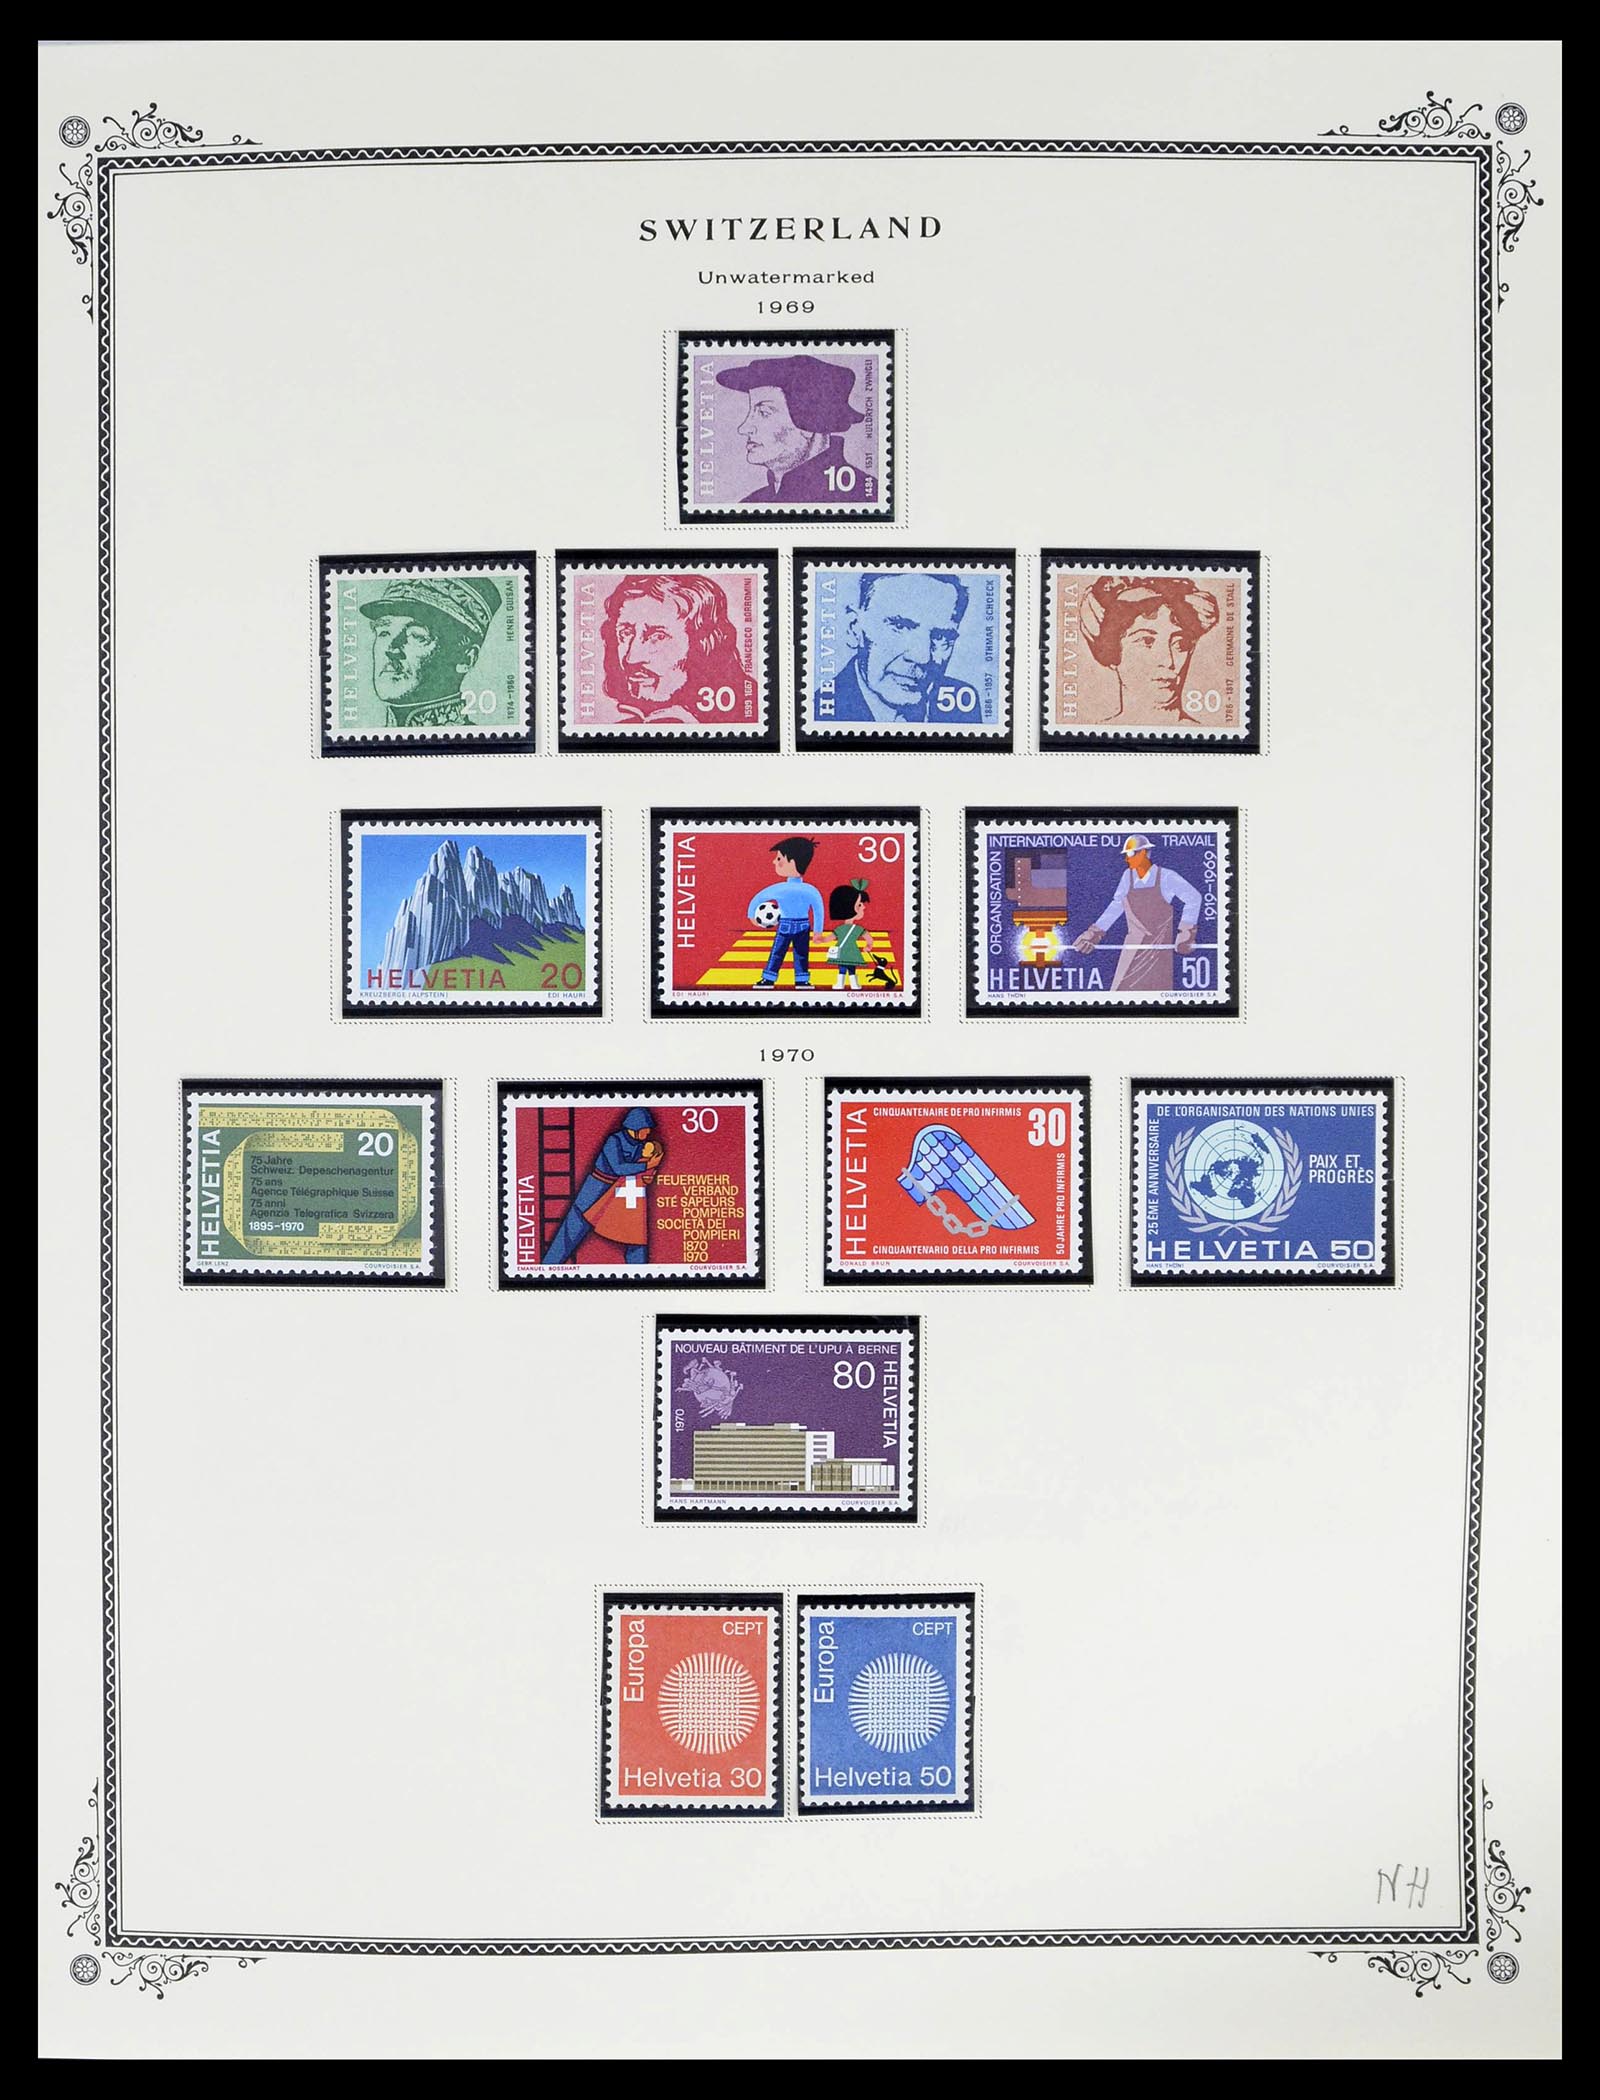 39178 0069 - Stamp collection 39178 Switzerland 1850-1989.